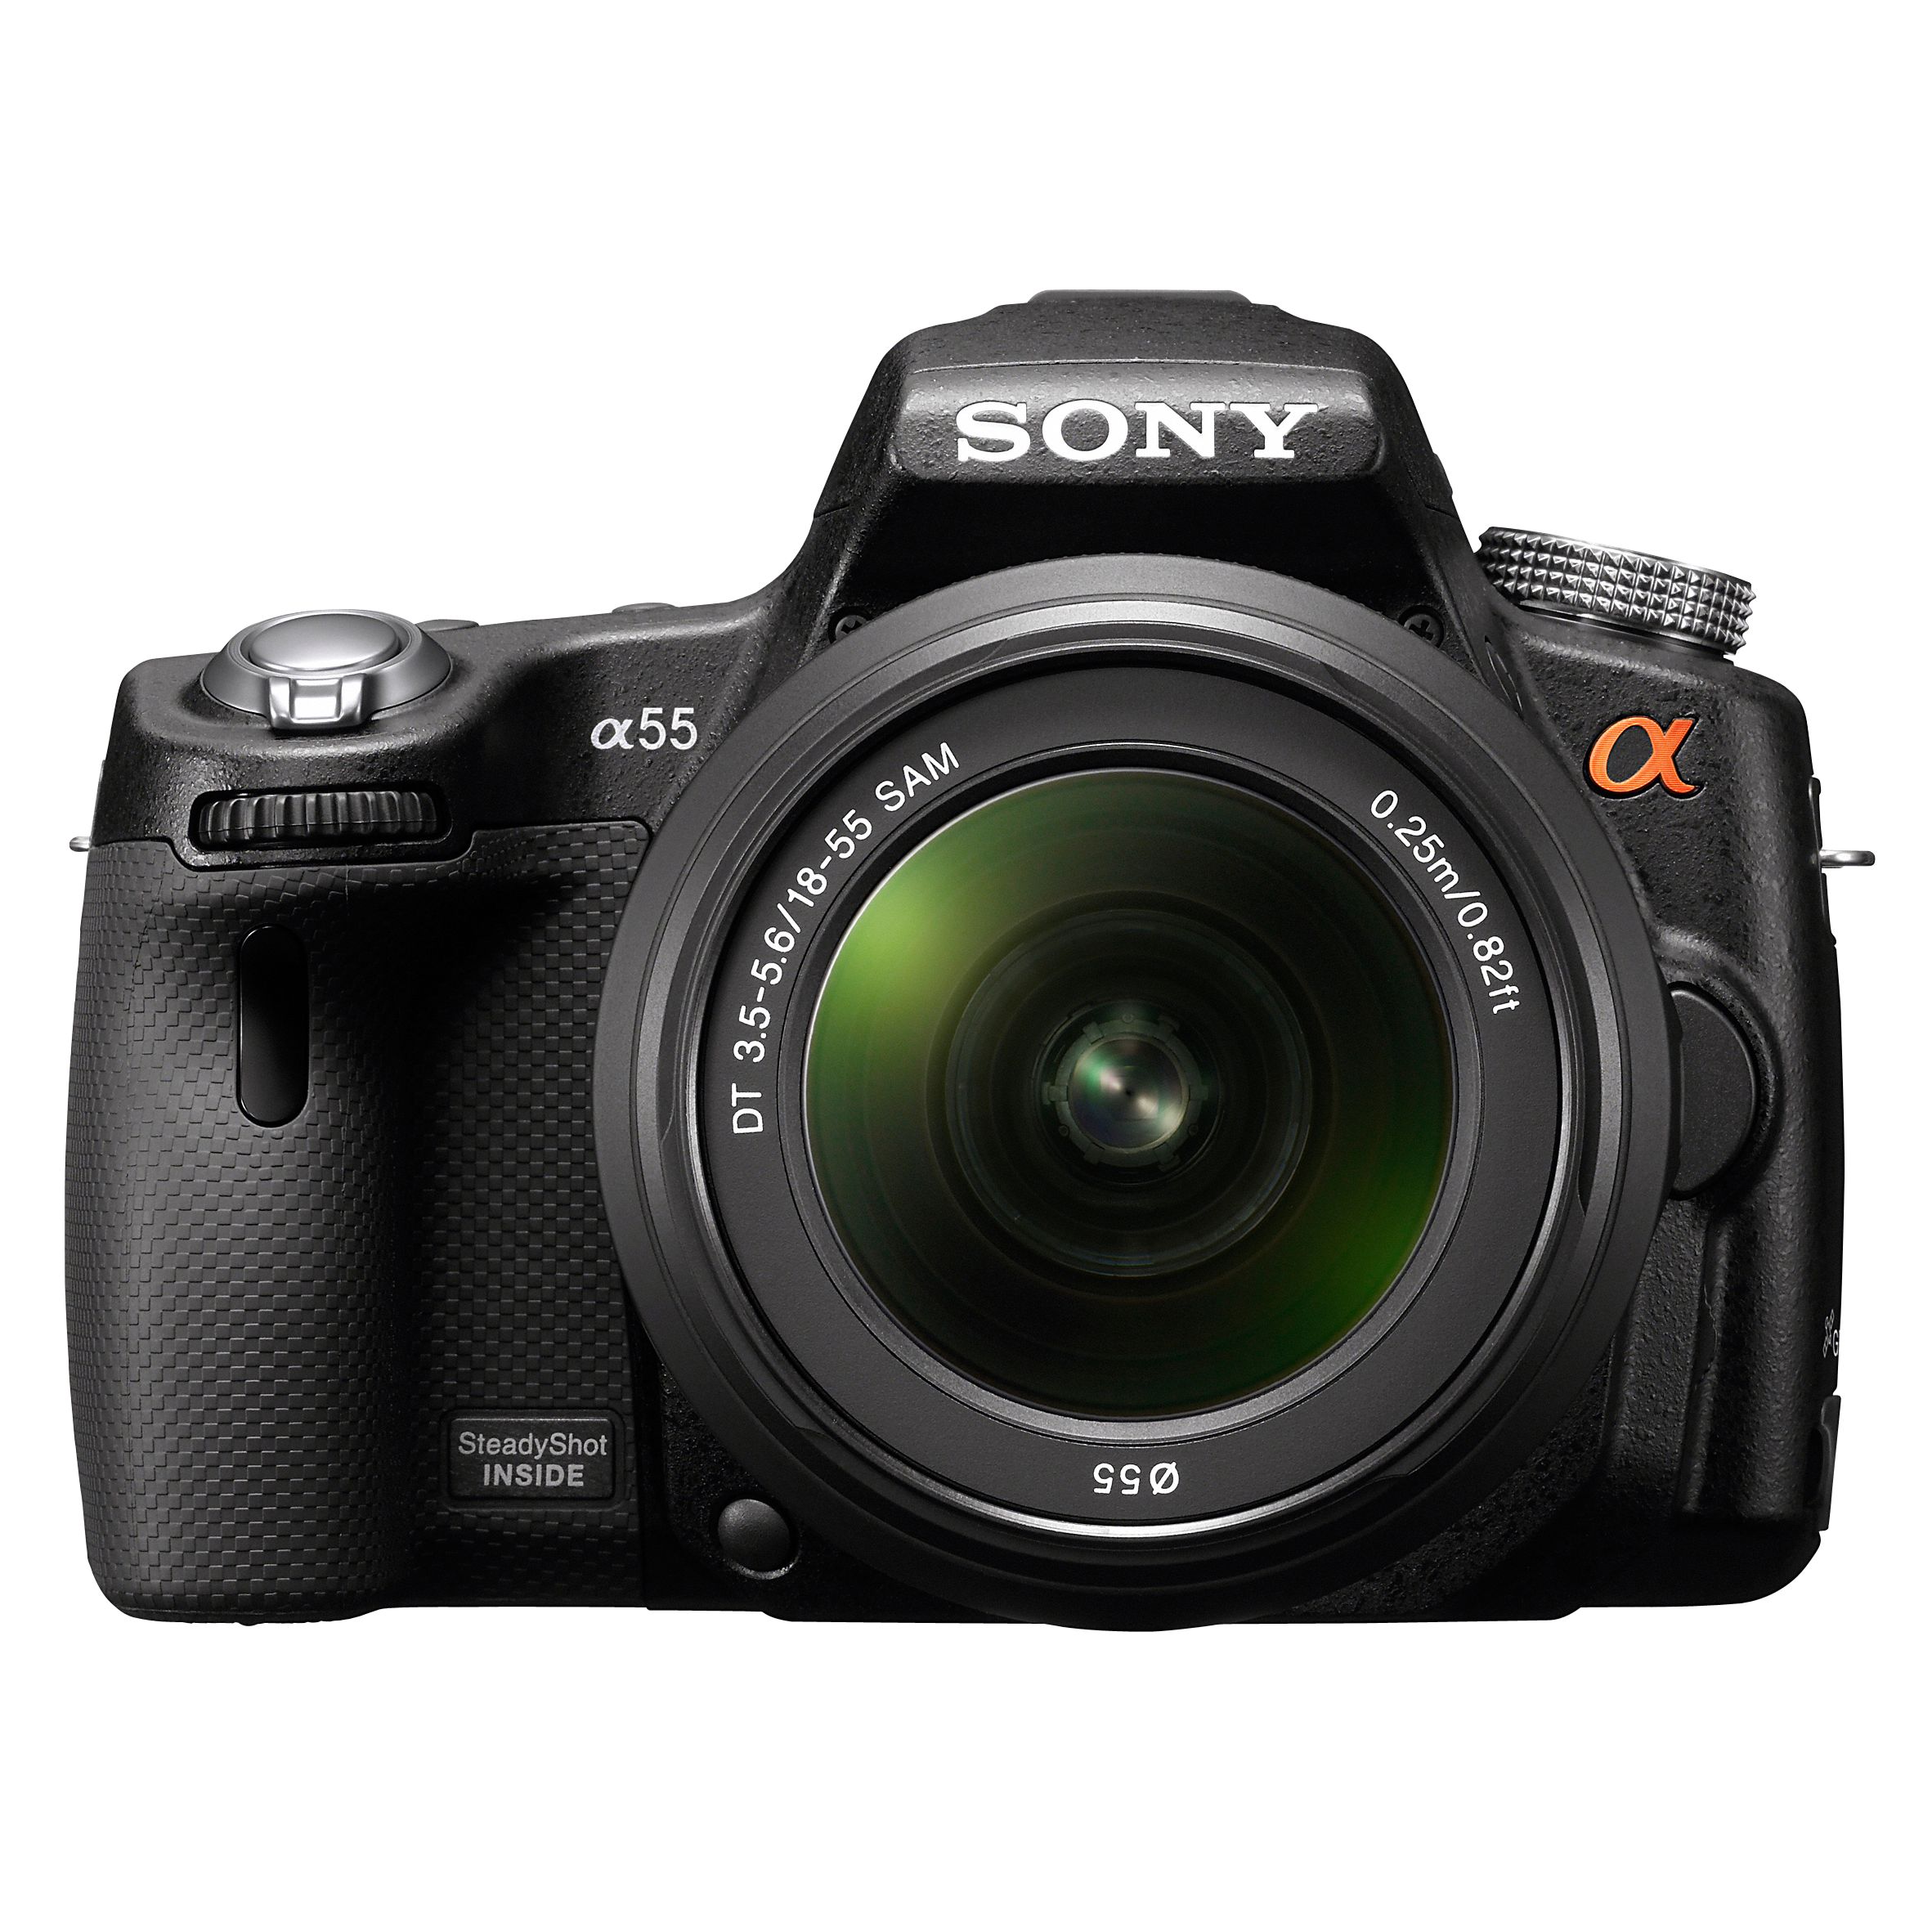 Sony DSLR-A55 Digital SLR Camera with 18-55mm Lens at John Lewis